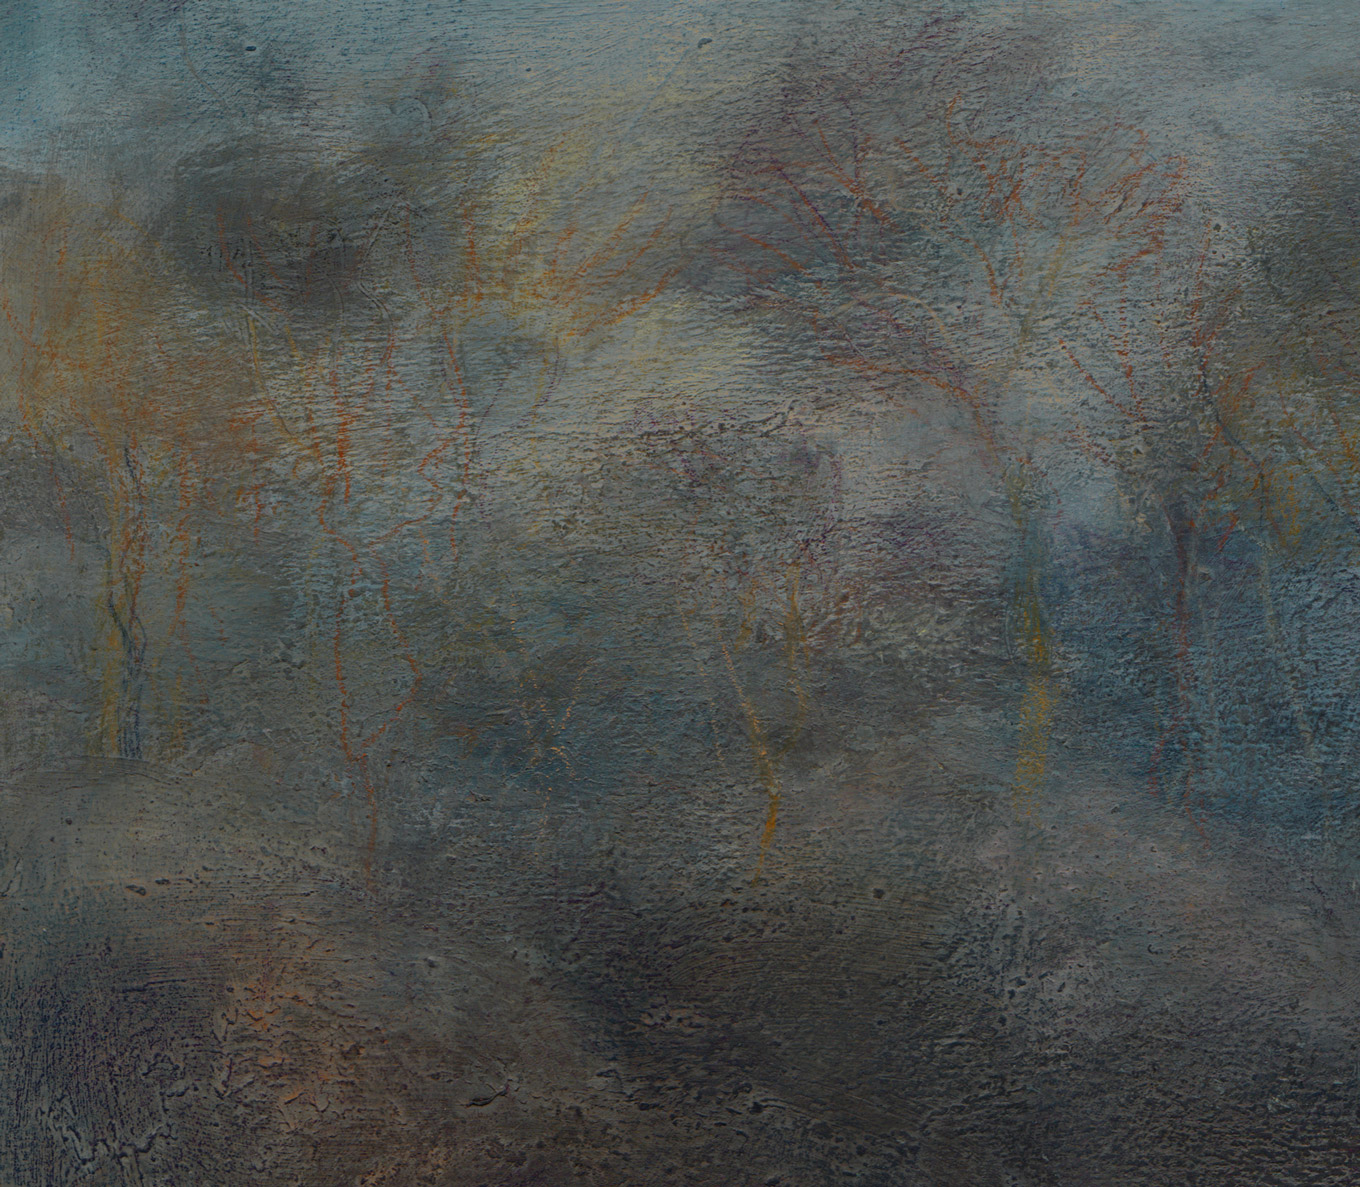 L1159 - Nicholas Herbert, British Artist, mixed media landscape painting of Trees on the Escarpment, 2019